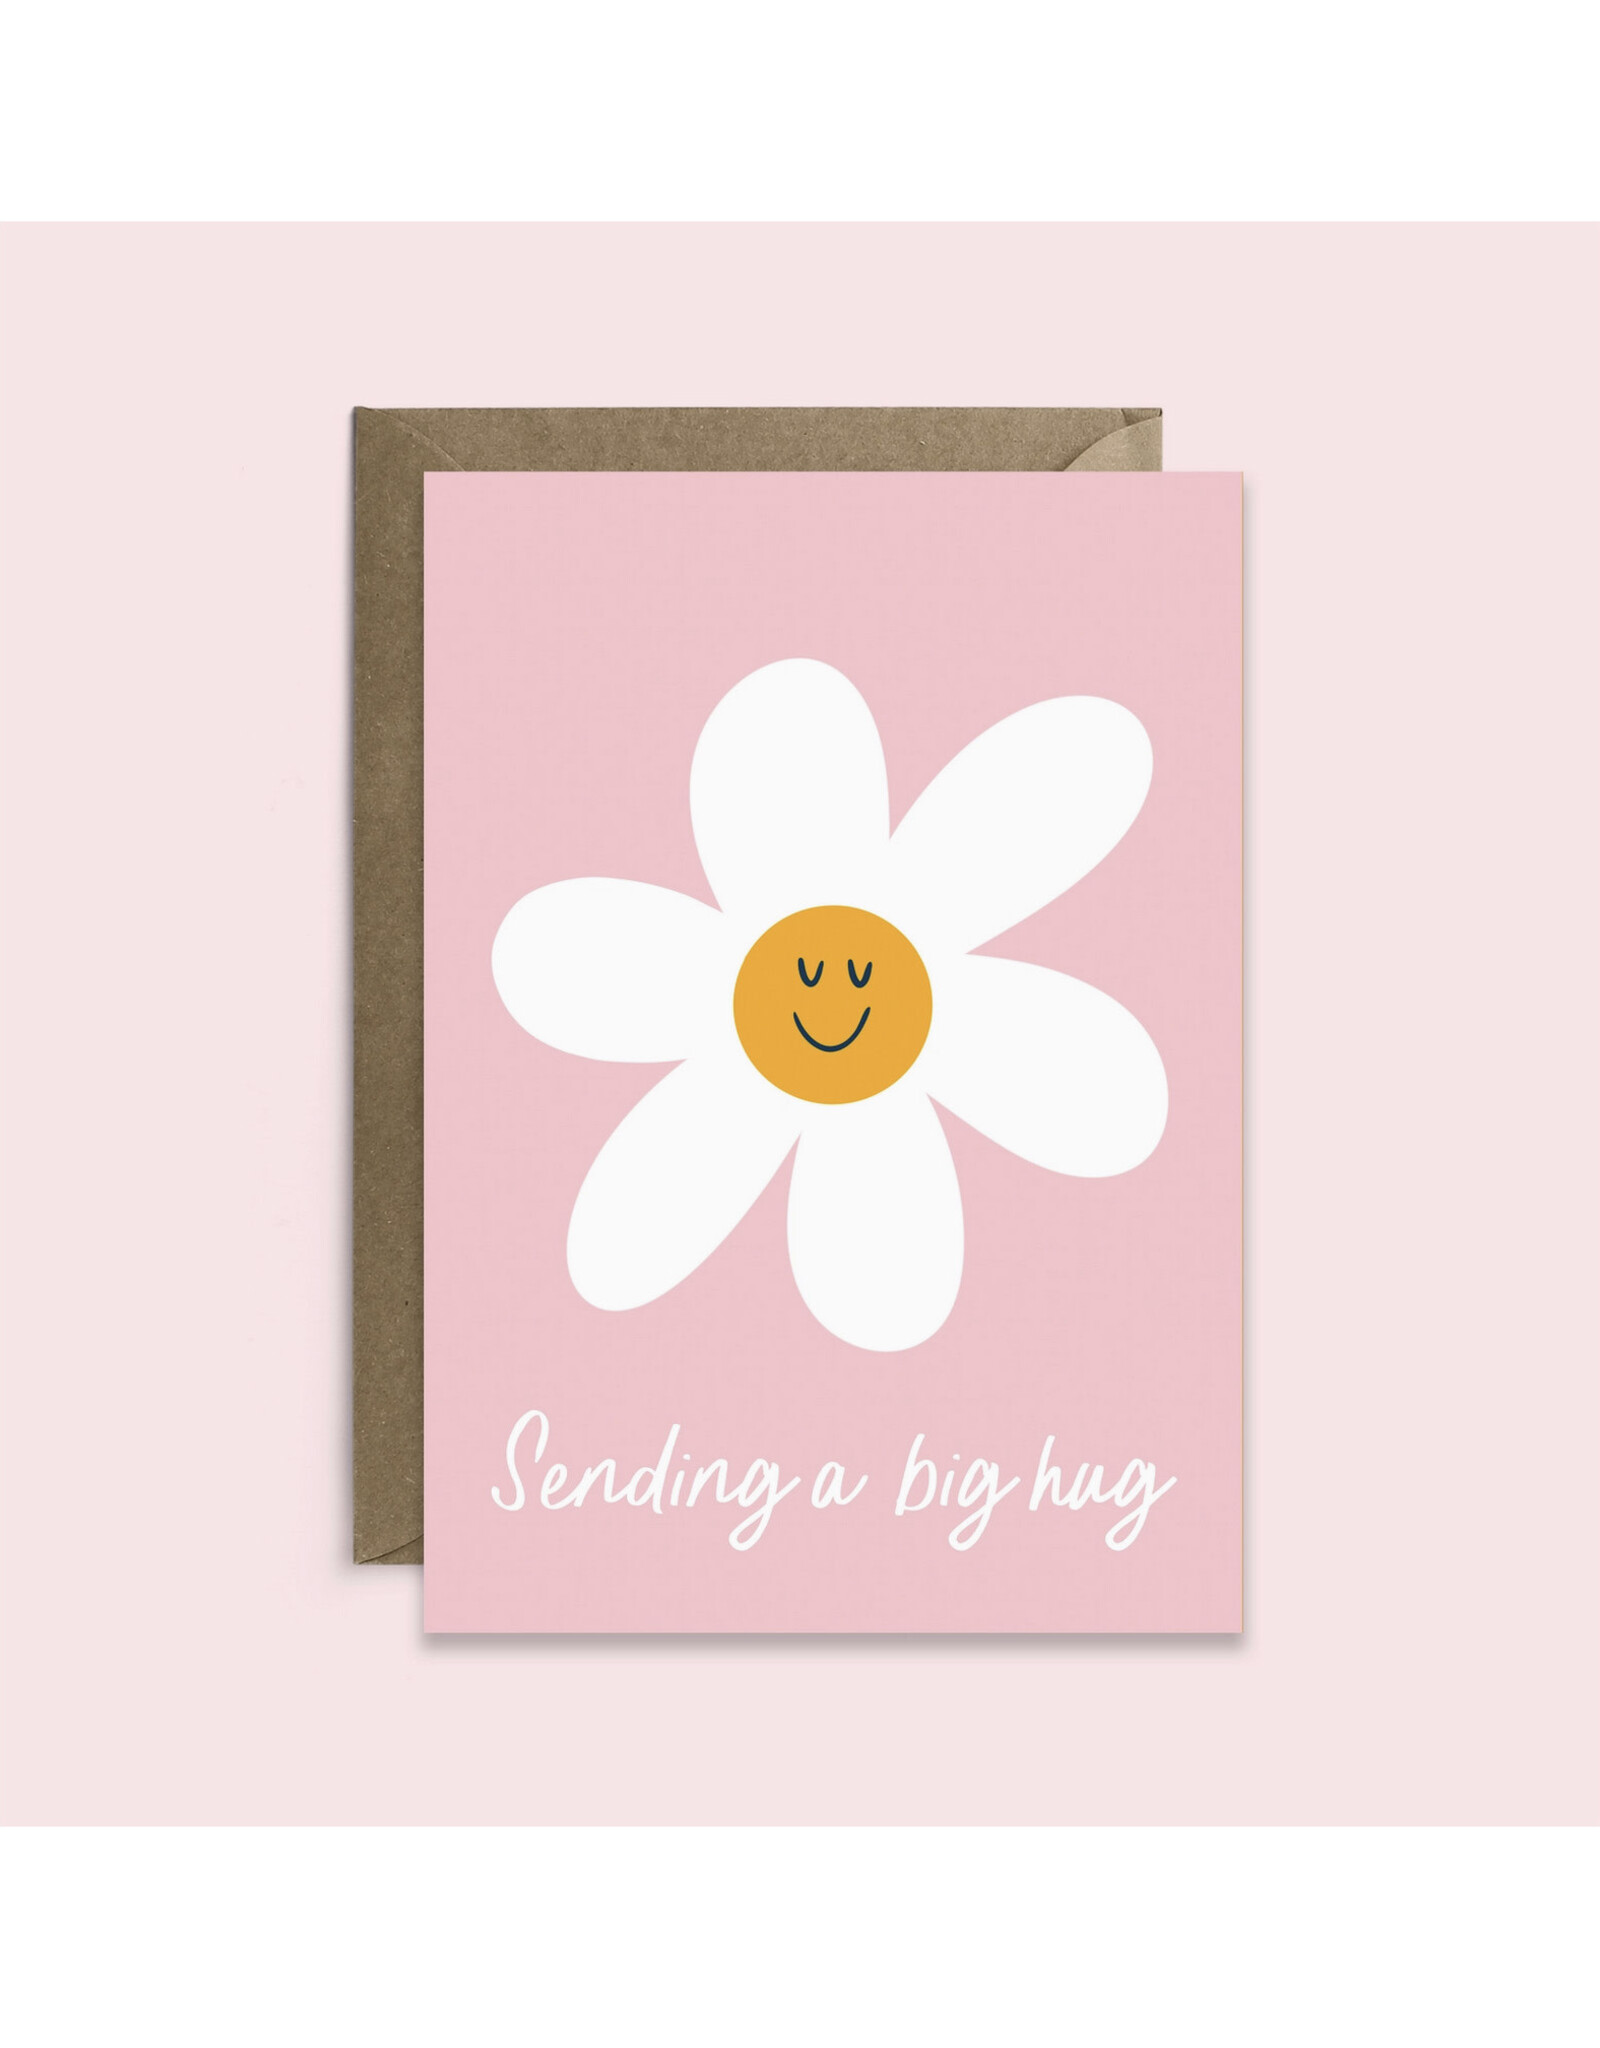 Sending a Big Hug Daisy Greeting Card